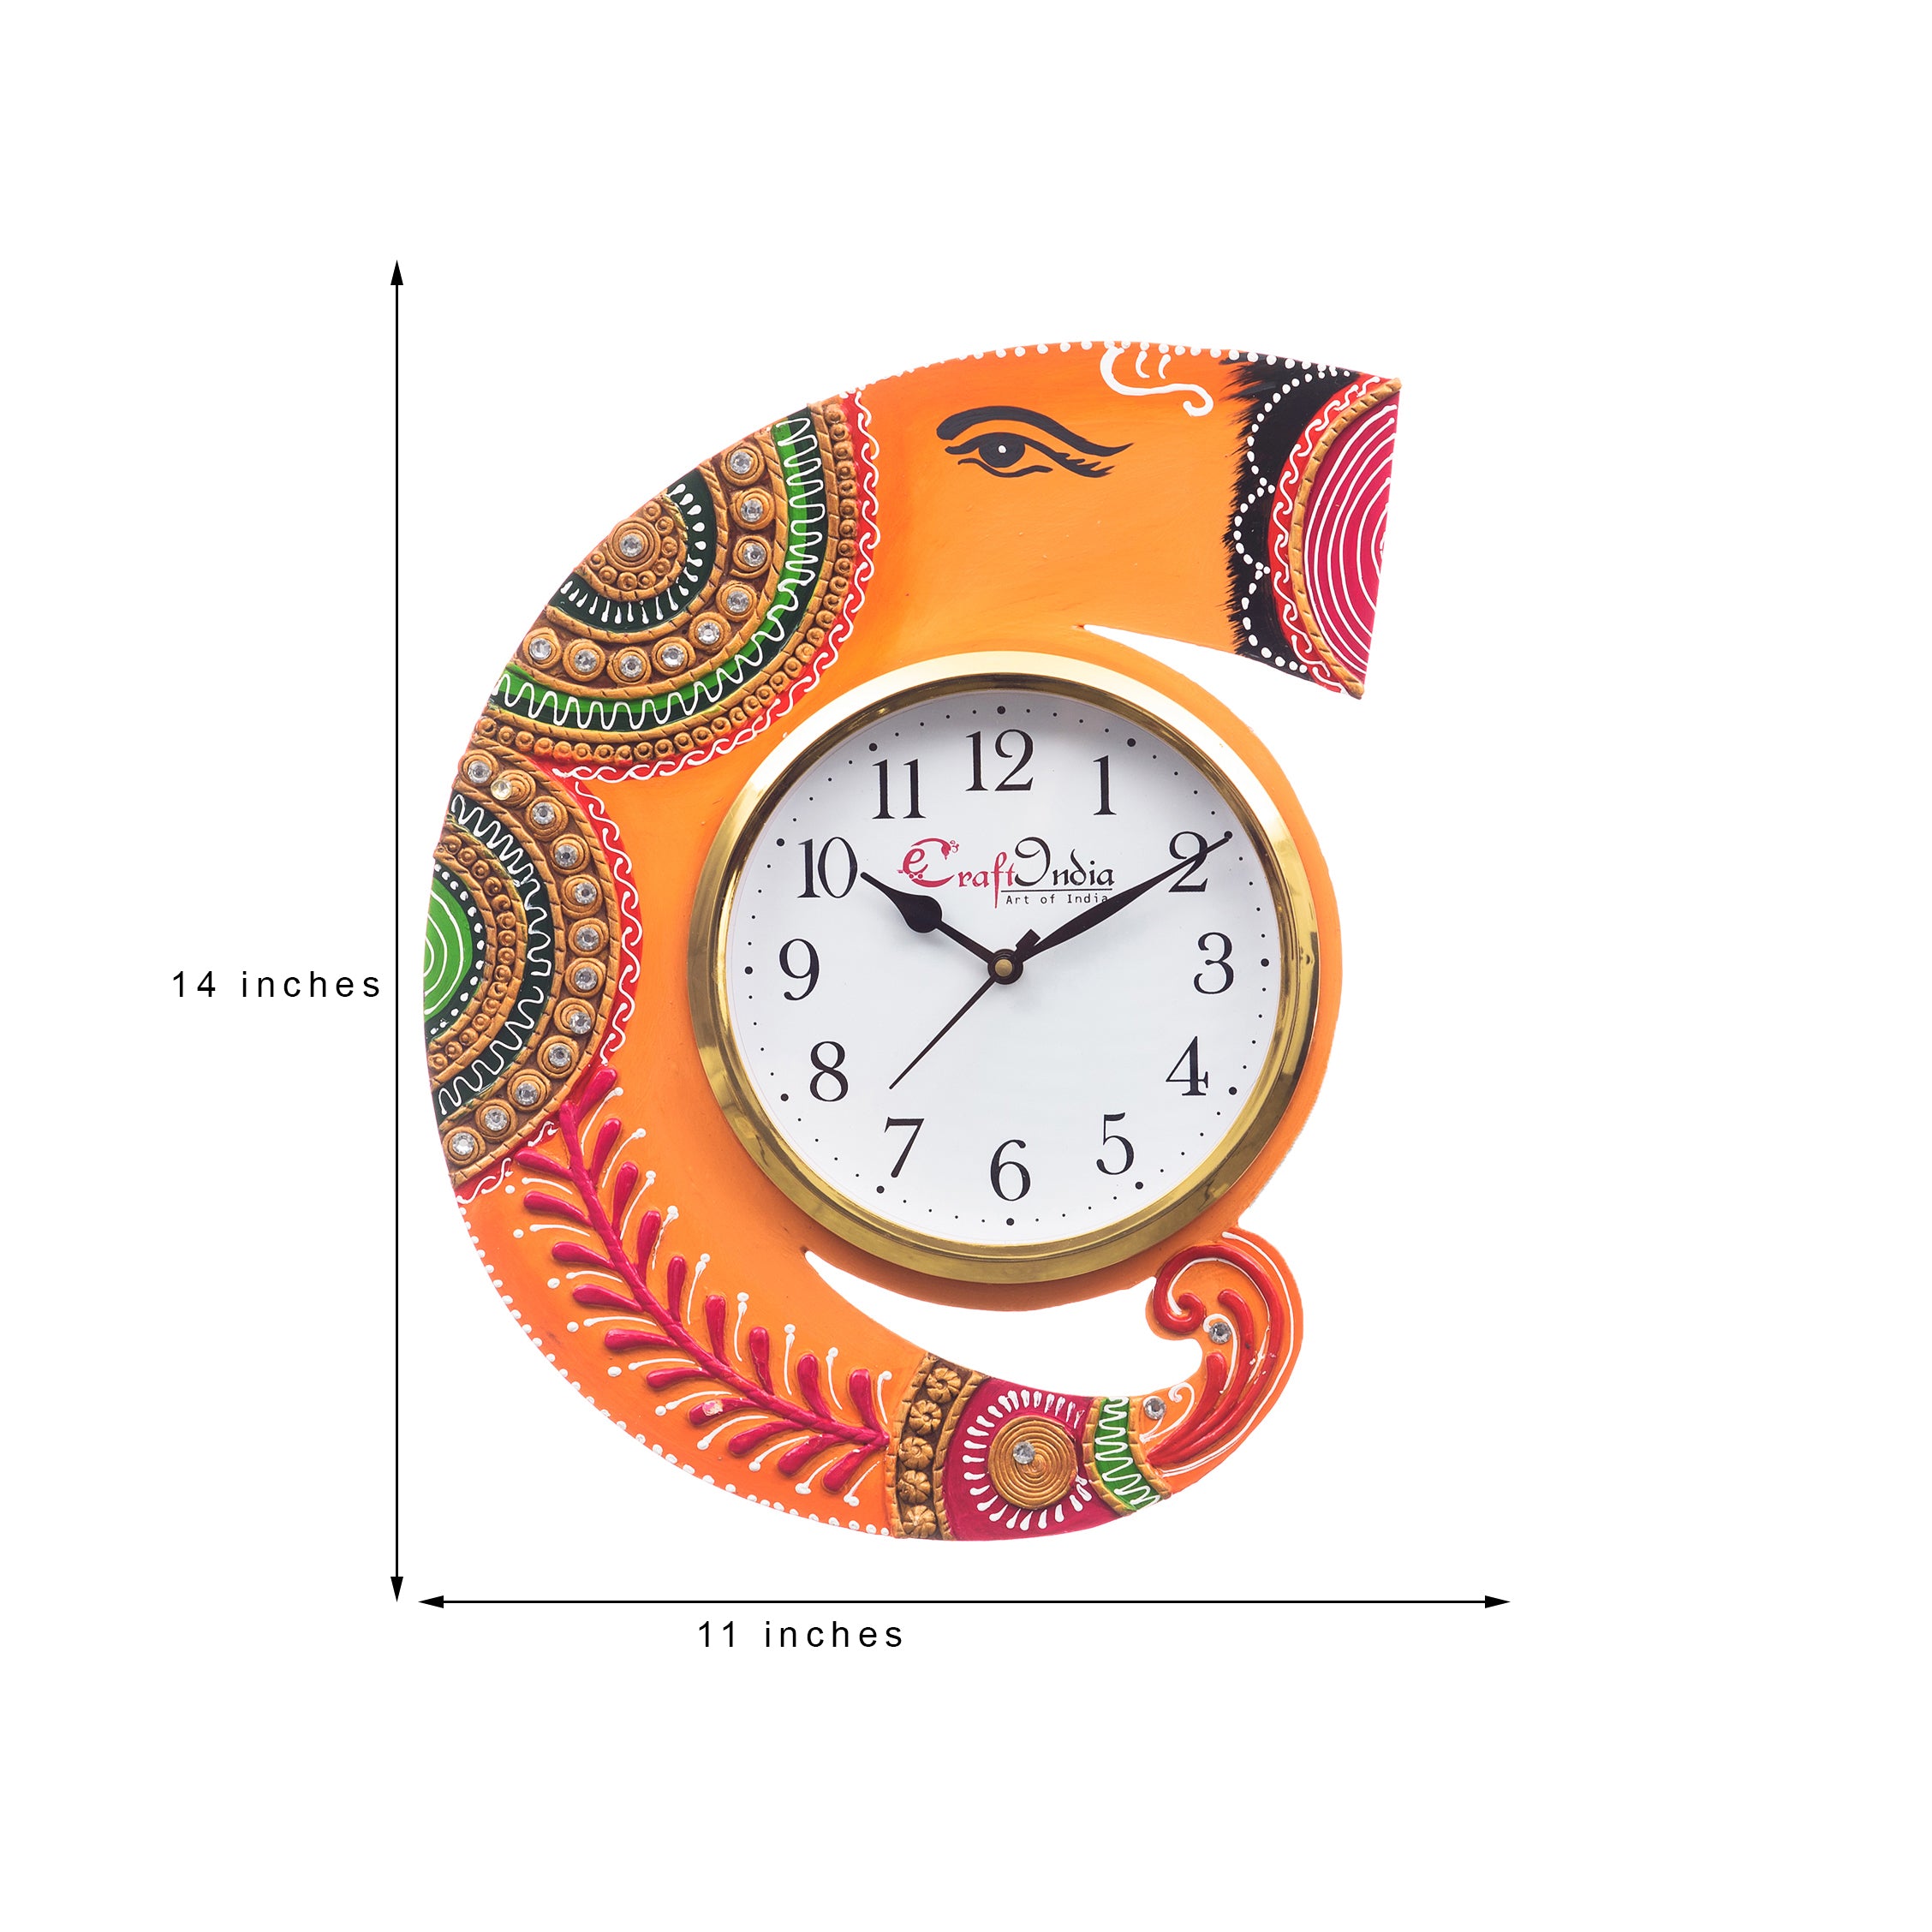 Decorative Handicrafted Paper Mache Lord Ganesha Designer Wall Clock 2